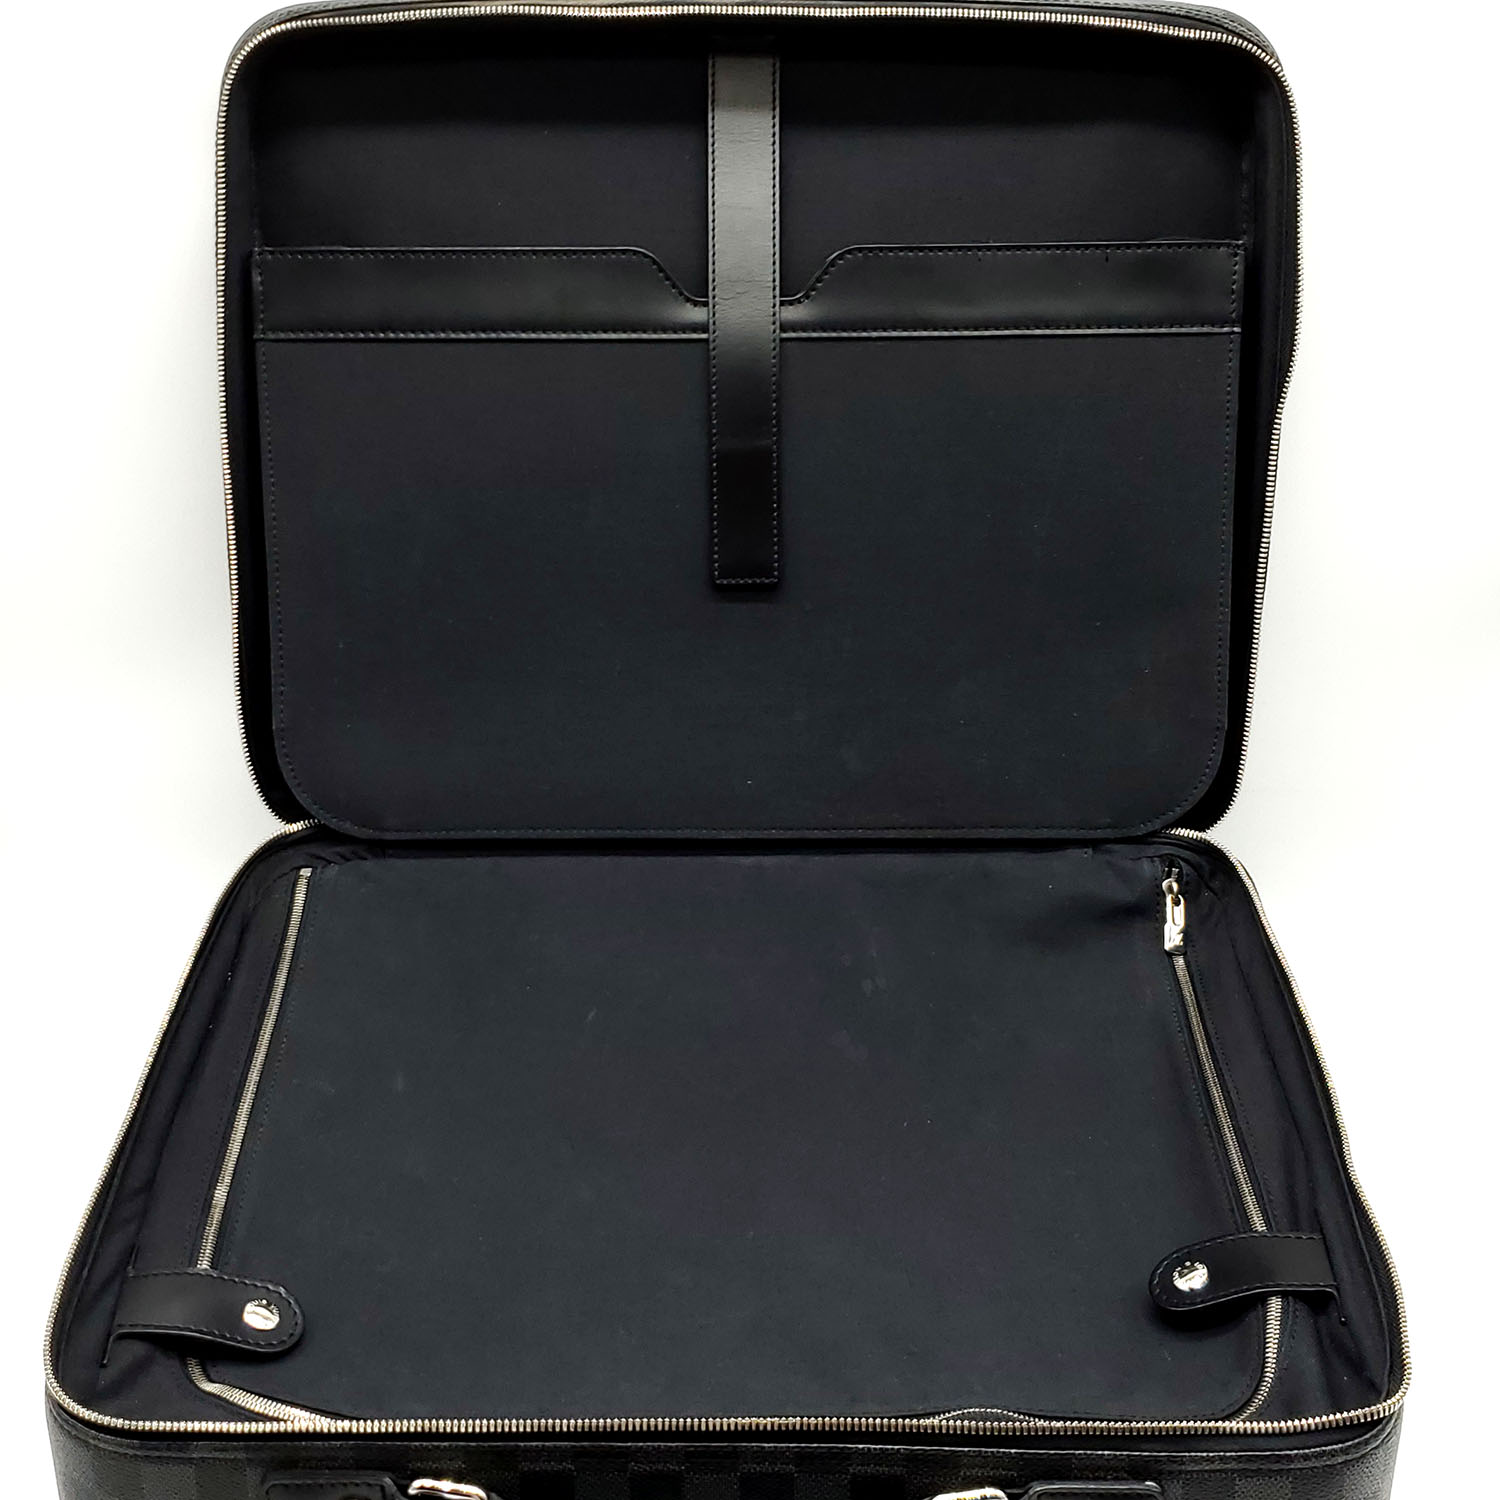 Pilot case leather travel bag Louis Vuitton Black in Leather - 17264281